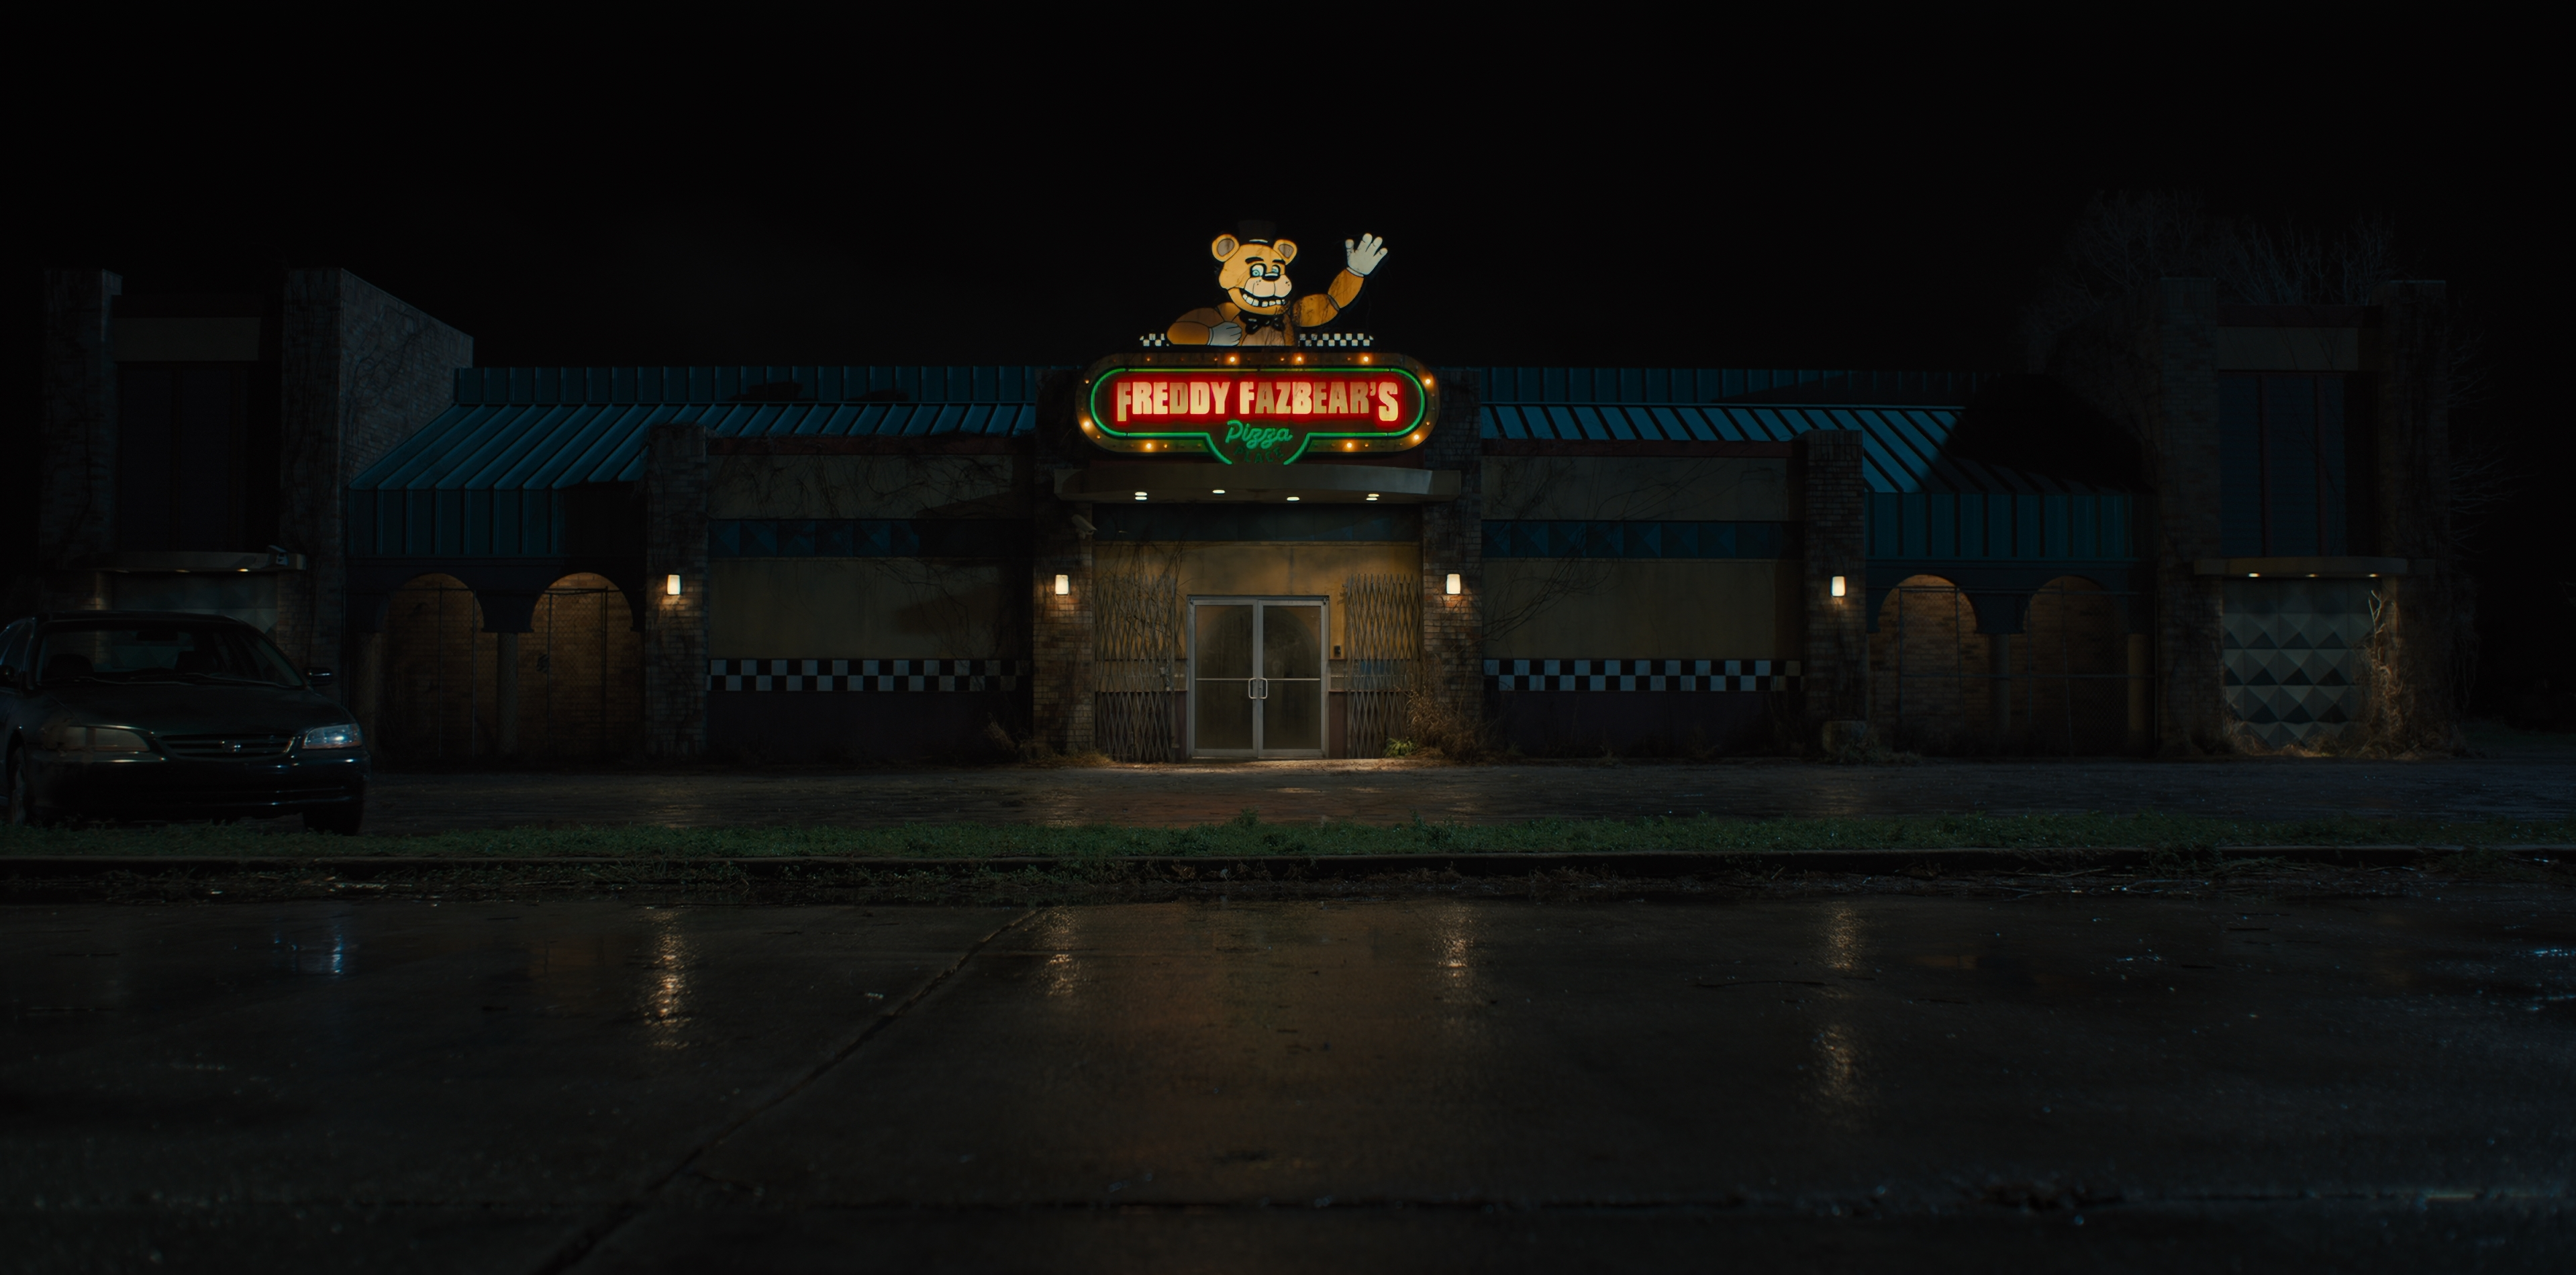 Freddy Fazbear's Pizza Place (Film), Five Nights at Freddy's Wiki